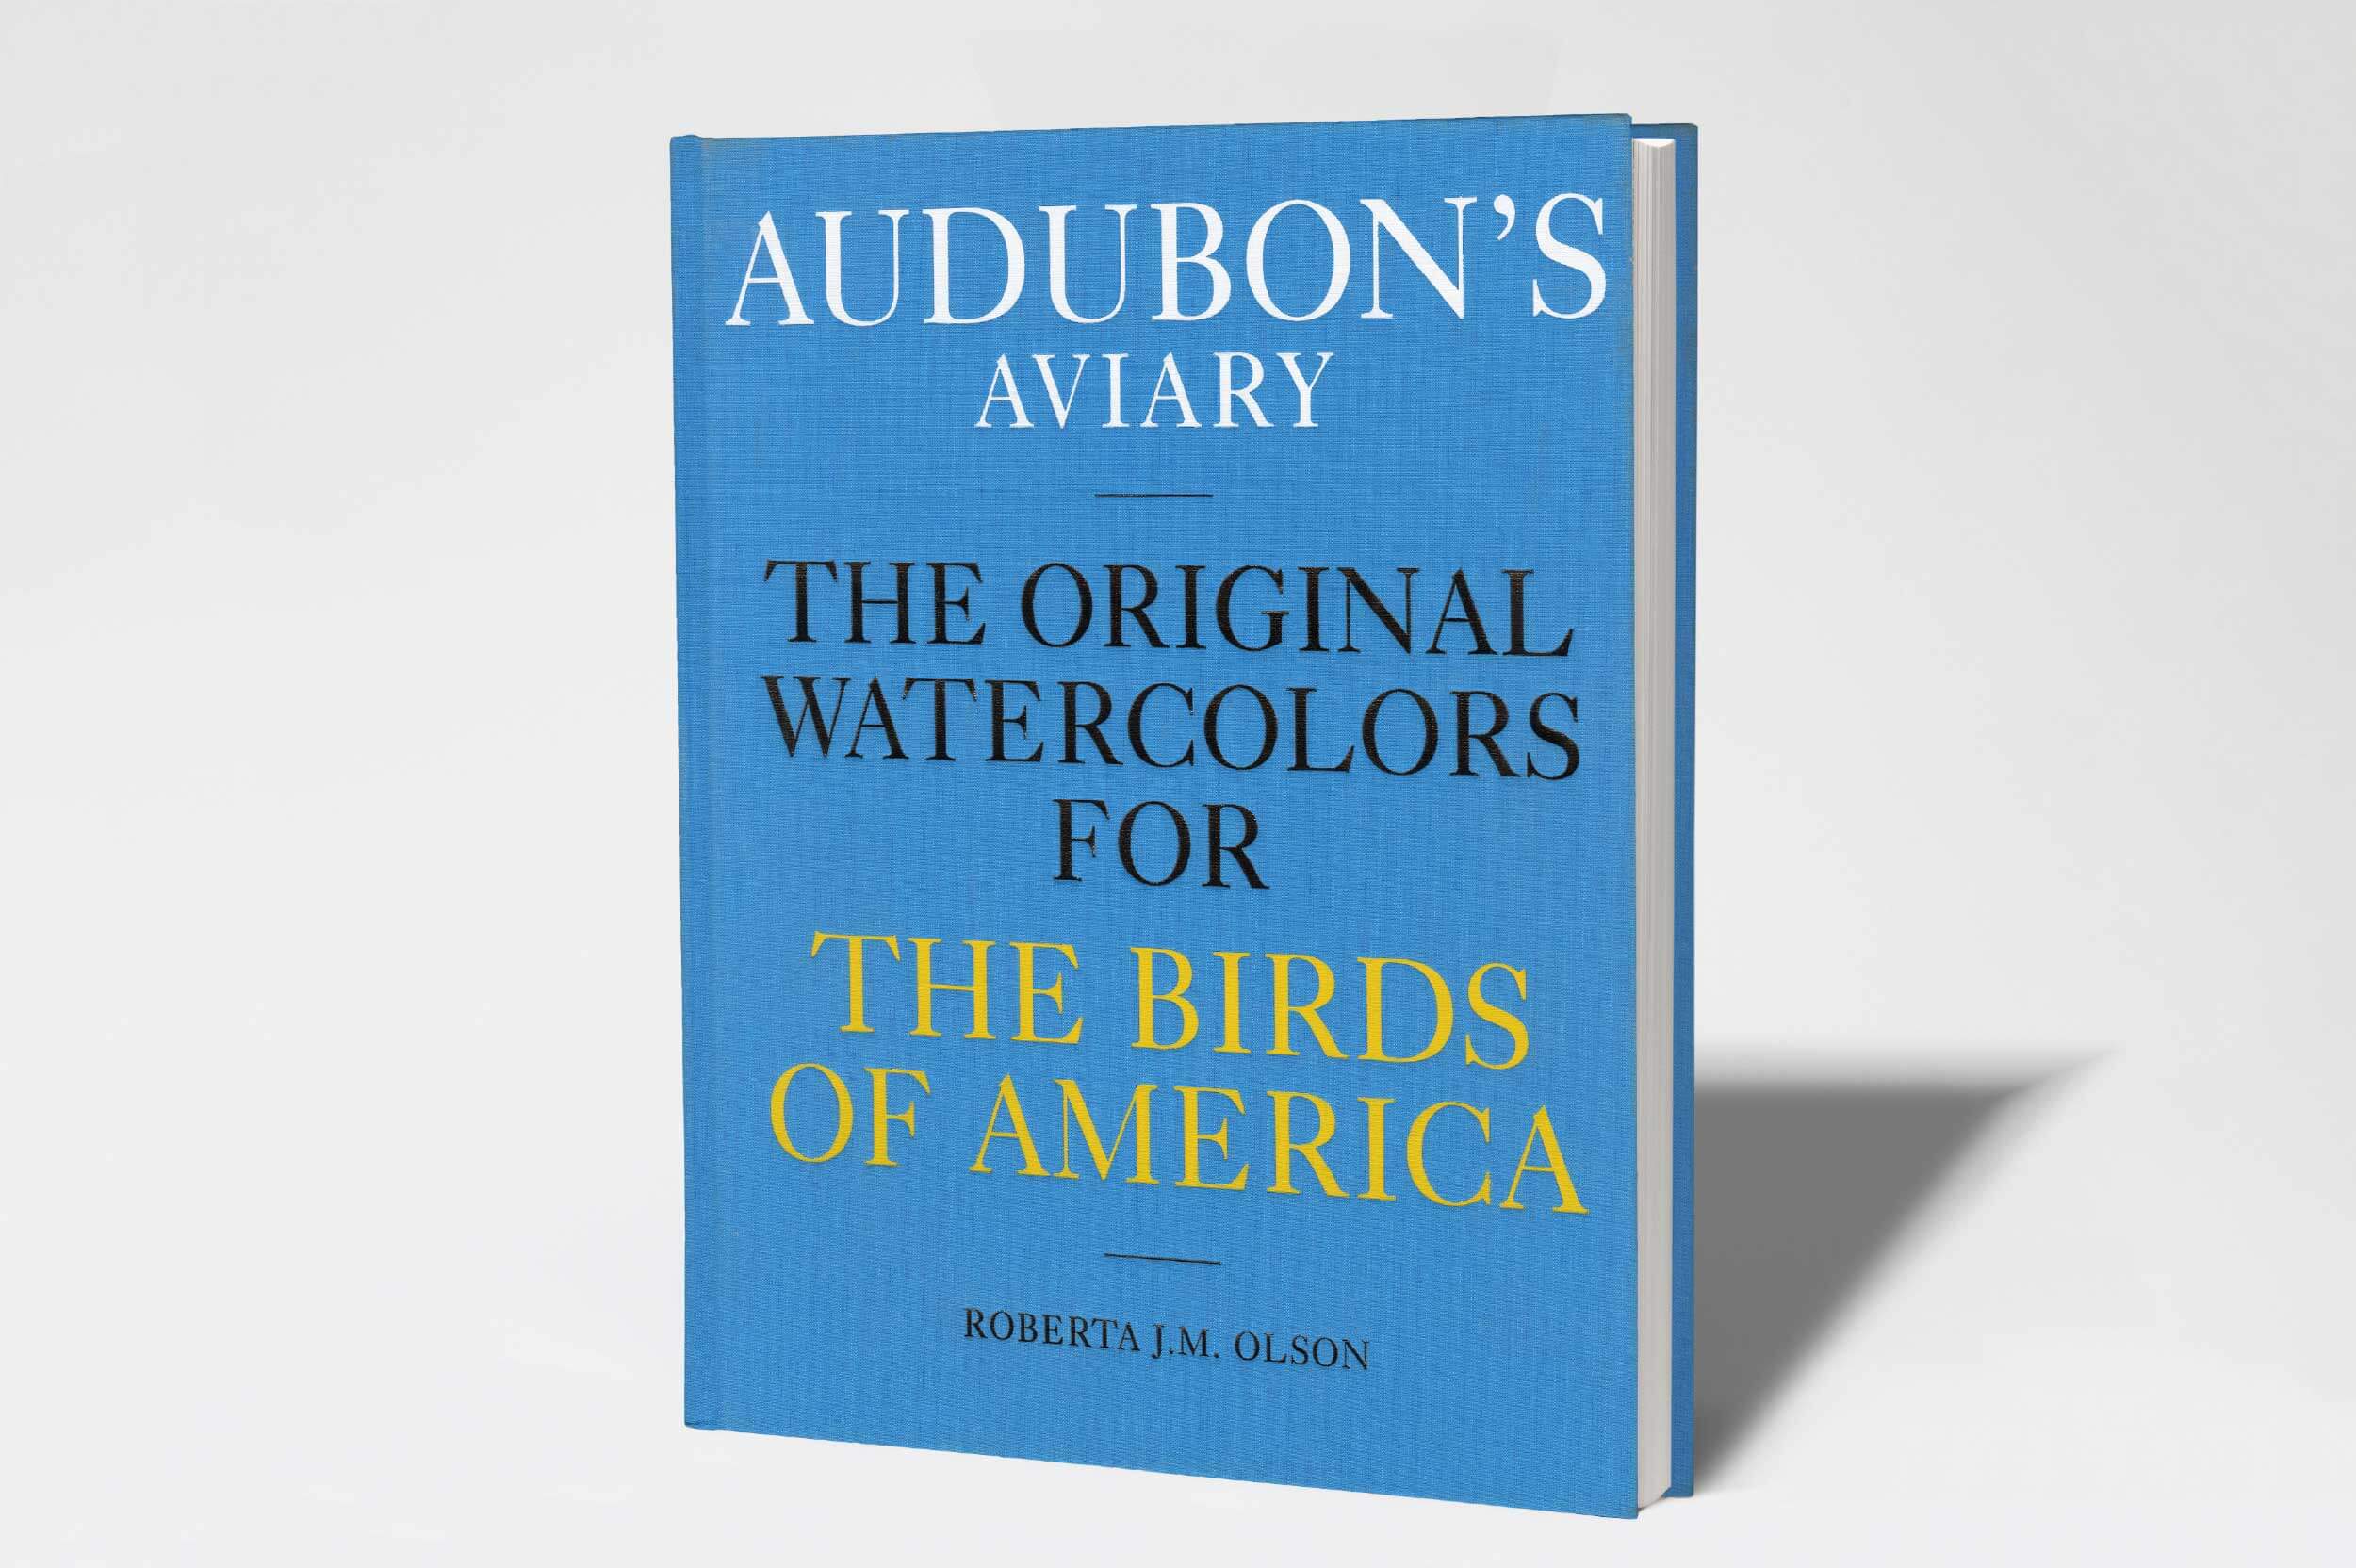 Audubon’s Aviary